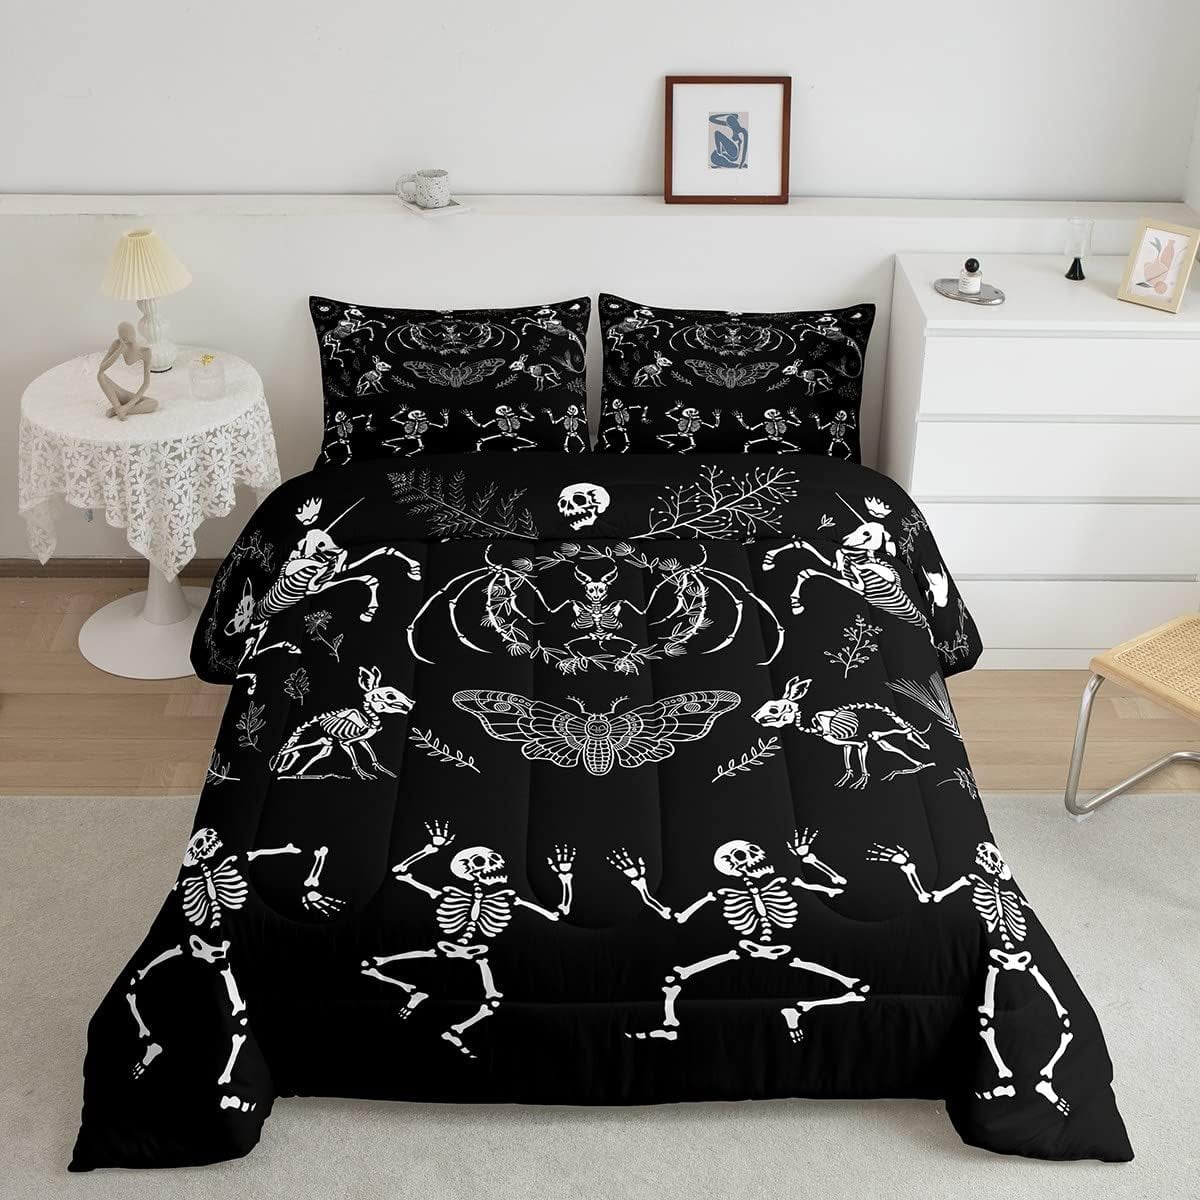 Sugar Skull Comforter Skeleton Bones Bedding,Gothic Moth Decor